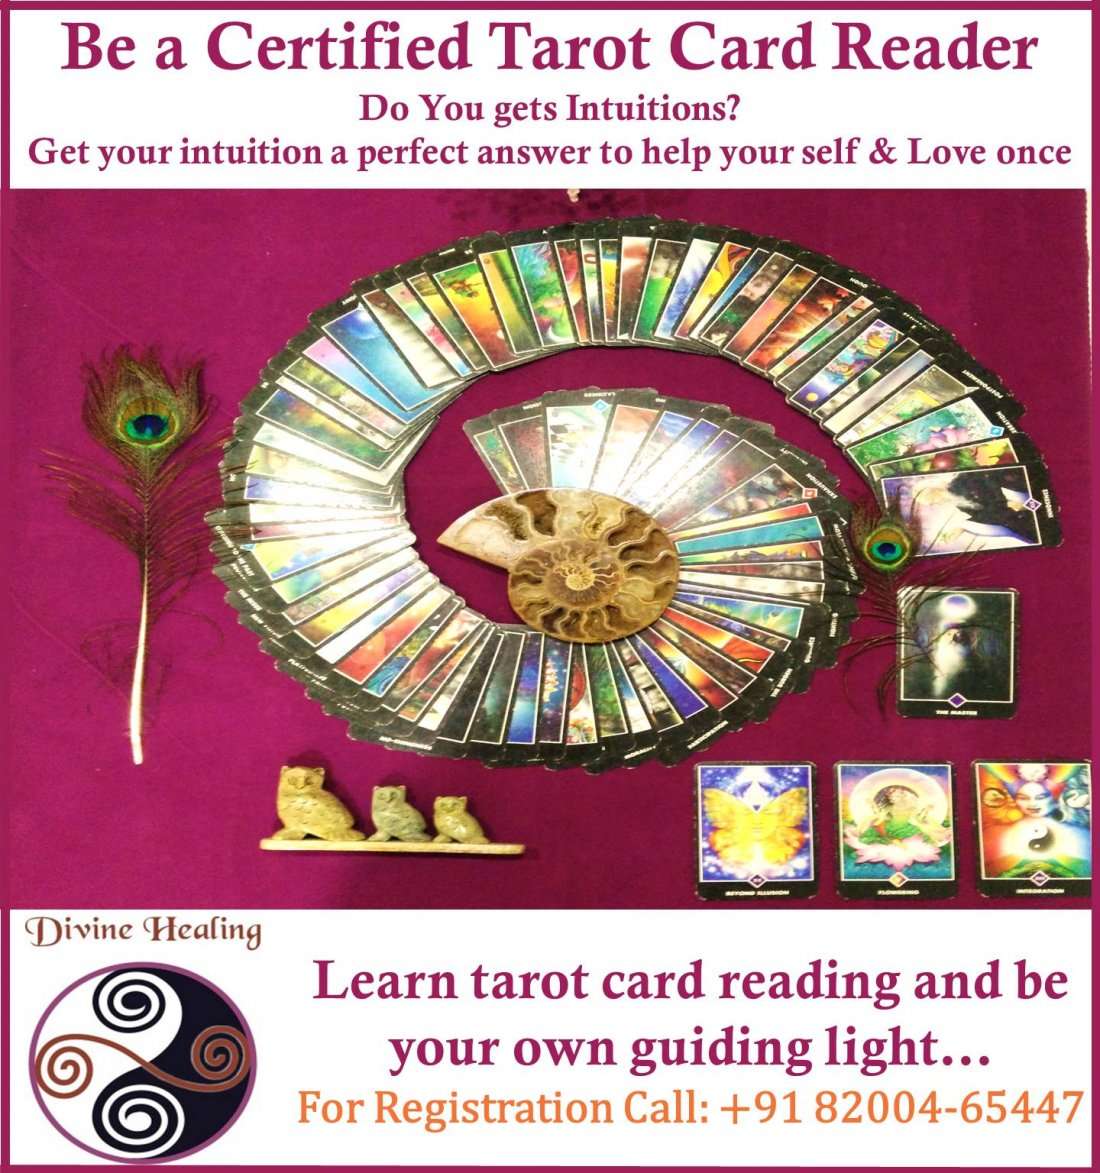 Tarot cards reading workshop